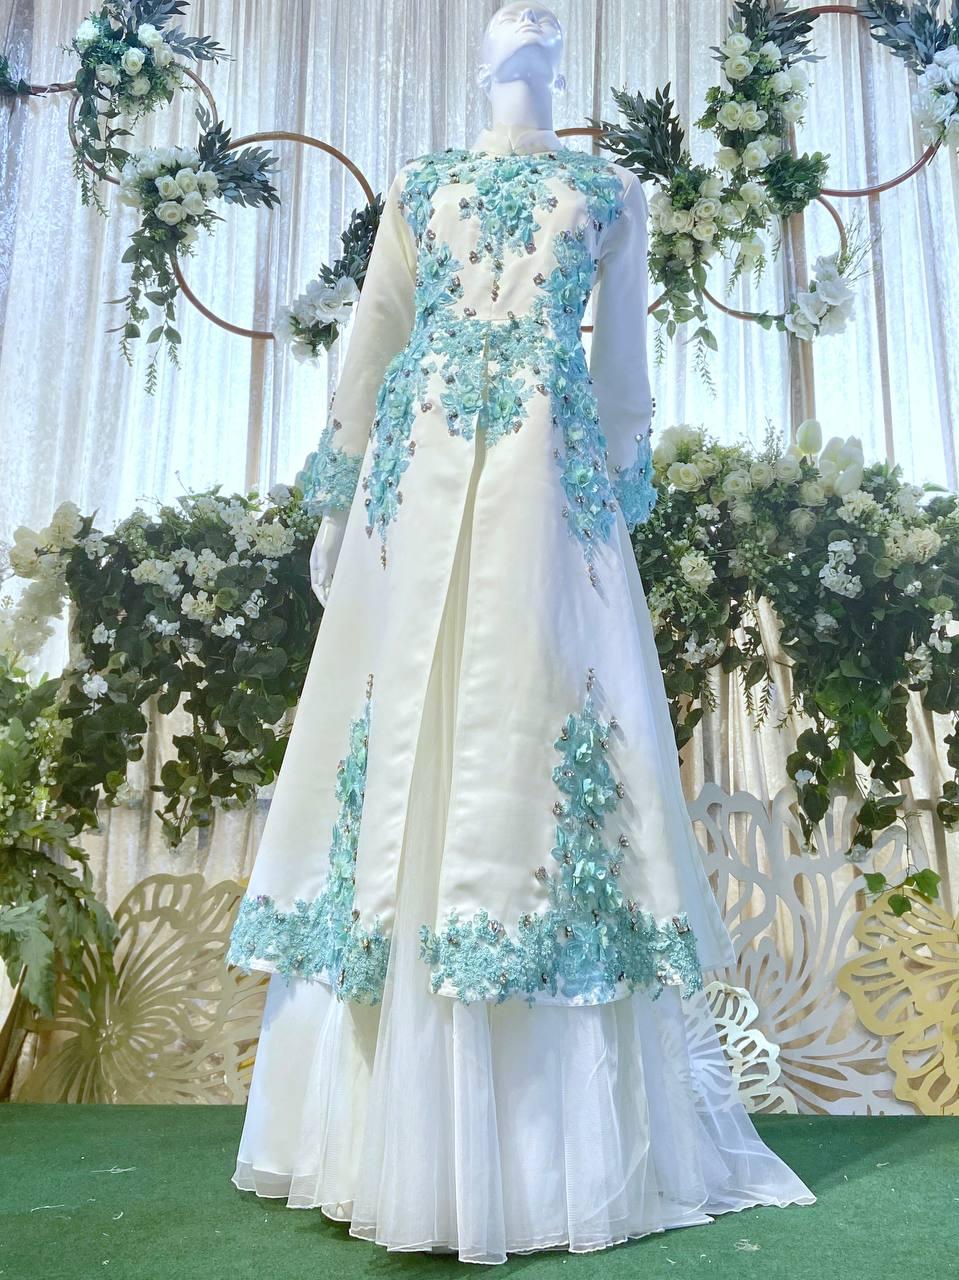 Wedding Dress-Malay Wedding Dress-Baju Pengantin-Busana Pengantin-Baju Pengantin-Baju Sanding-PP Signature